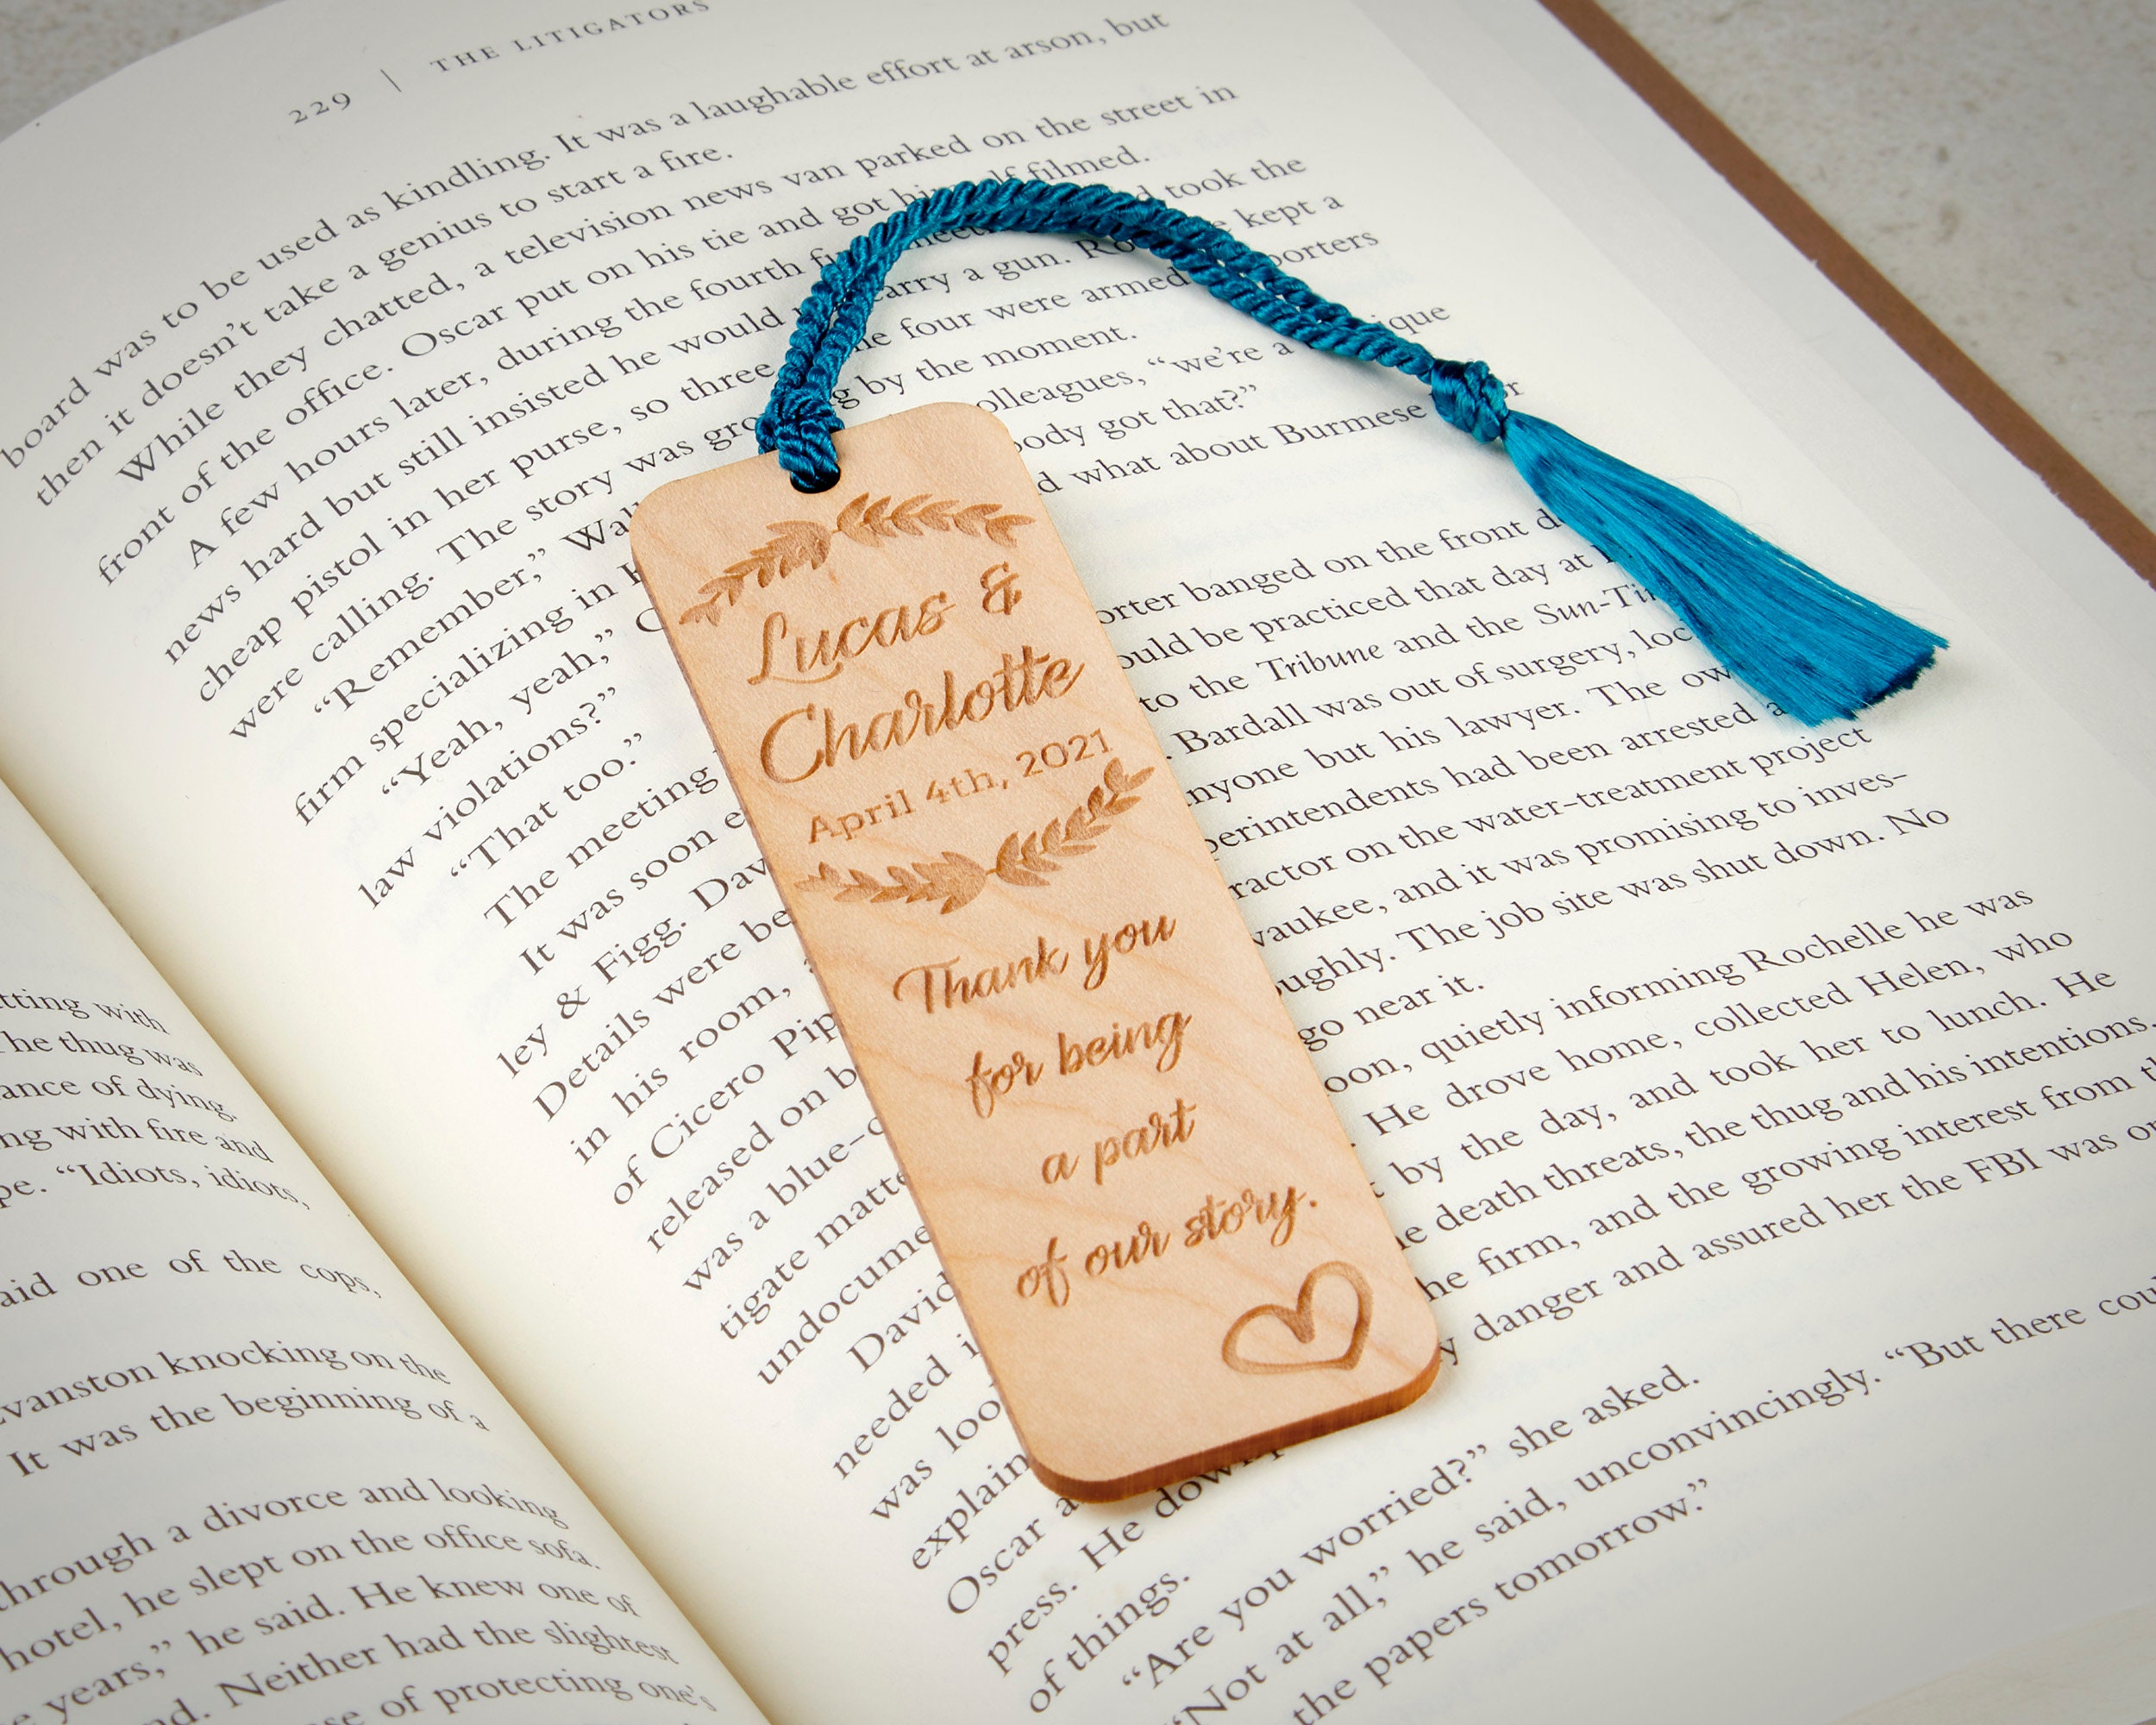 Wood Bookmarks — Juniper and Ivy Designs